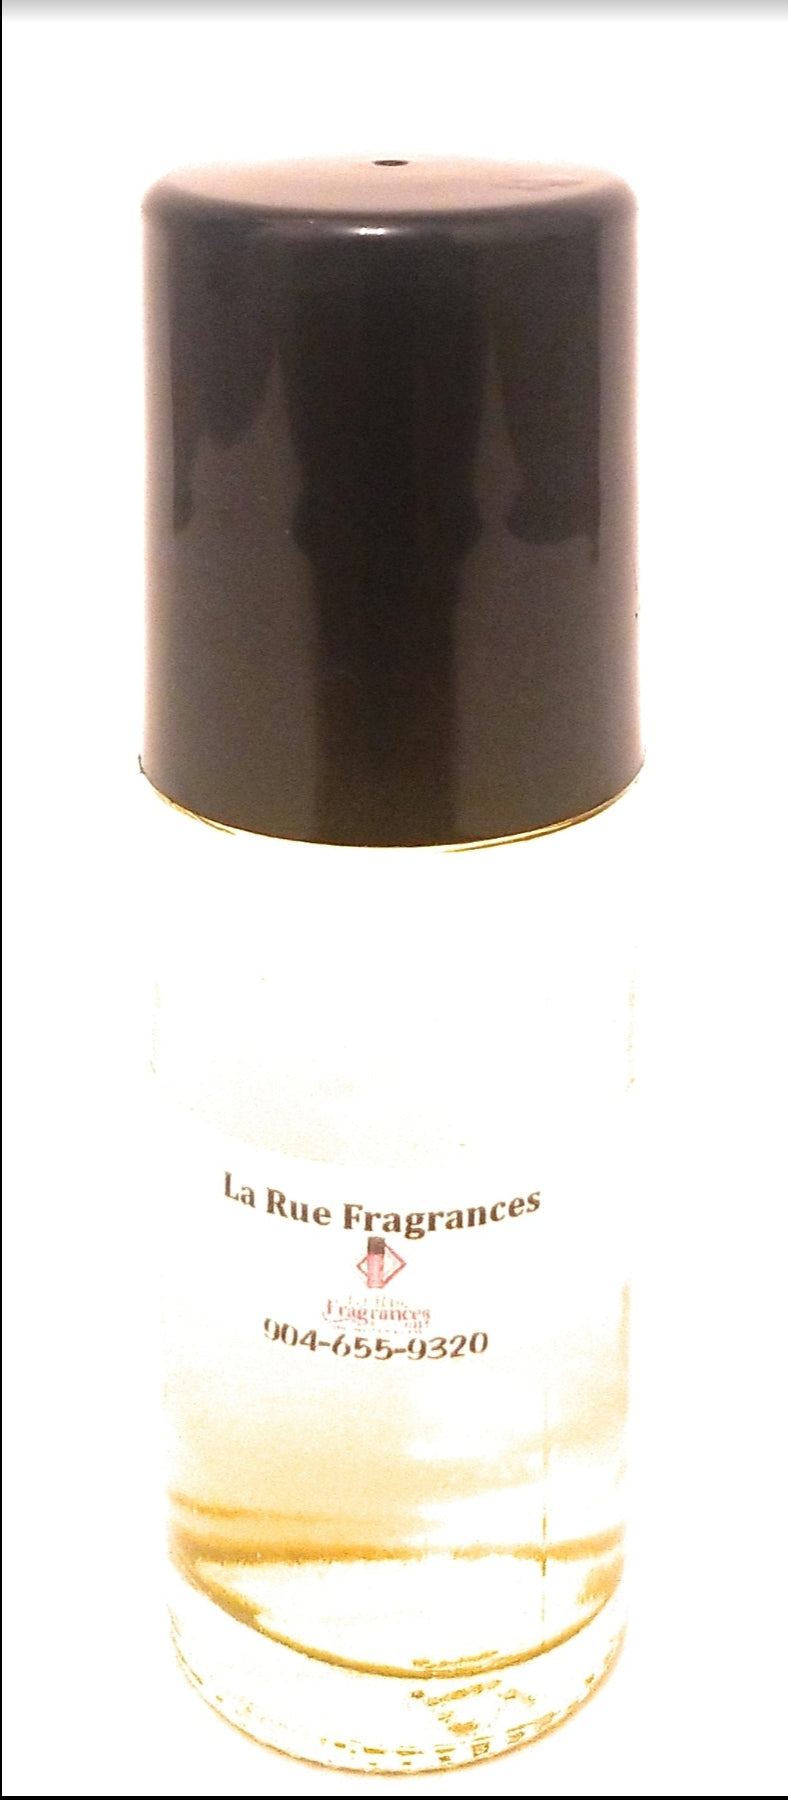 Compare aroma to L'Homme Eau De Parfum by YSL men type 1.3oz large roll on bottle cologne fragrance body oil. Alcohol-Free (Men)